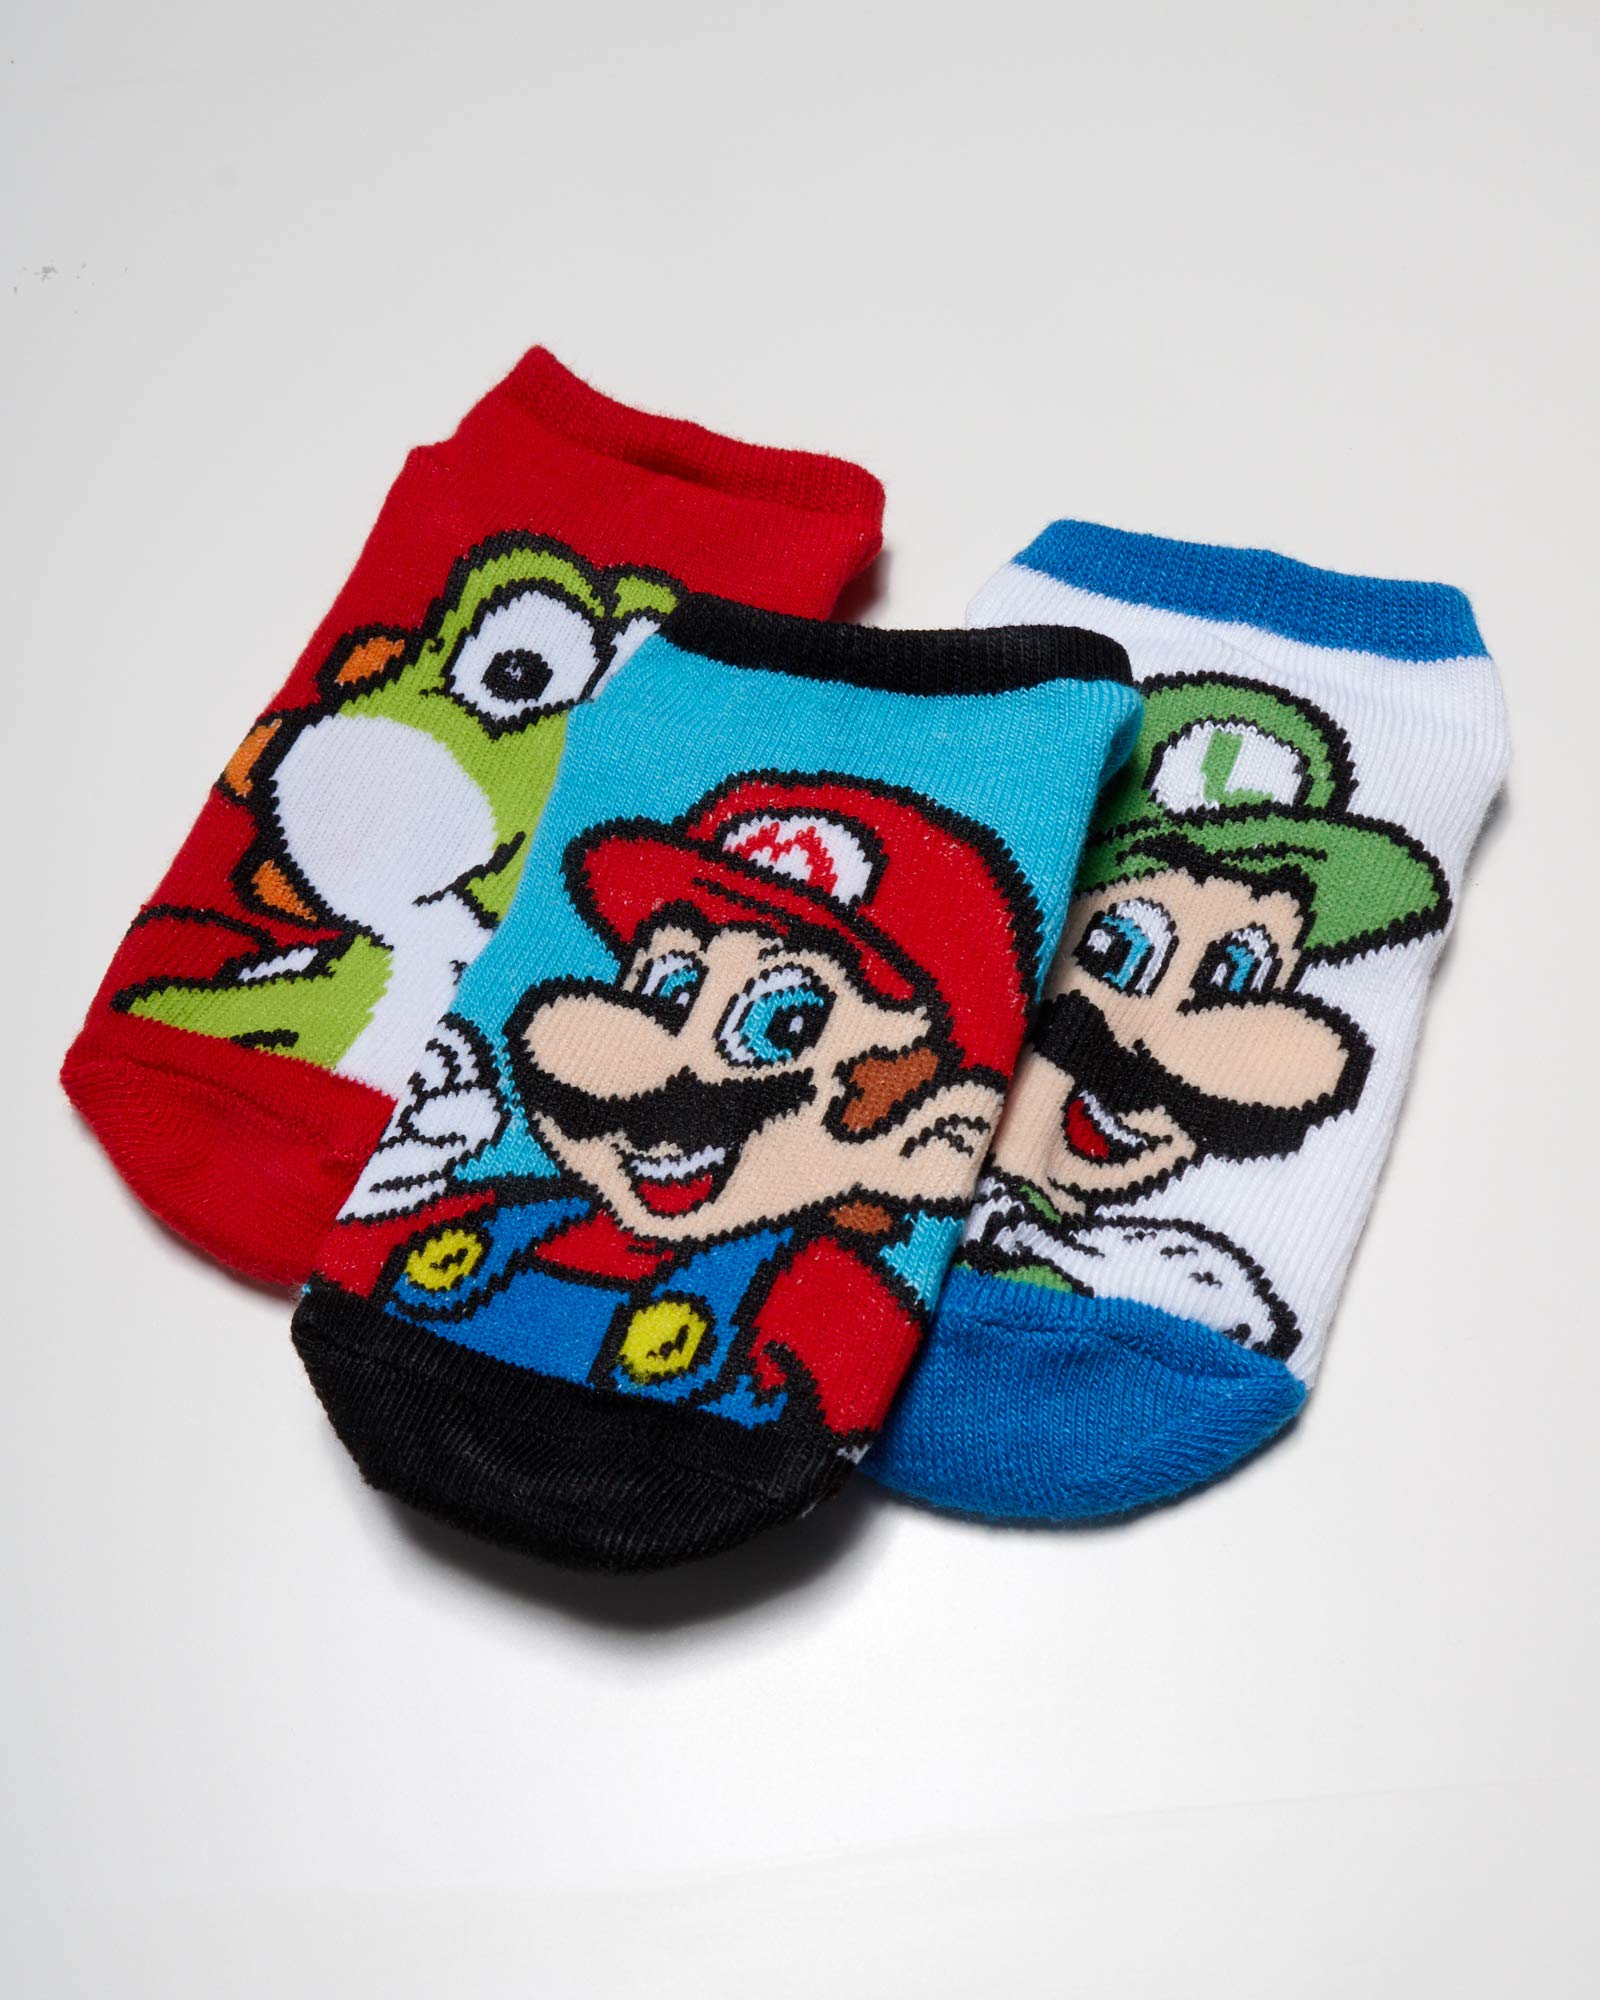 Mario Boys 5 Pack No Show Socks